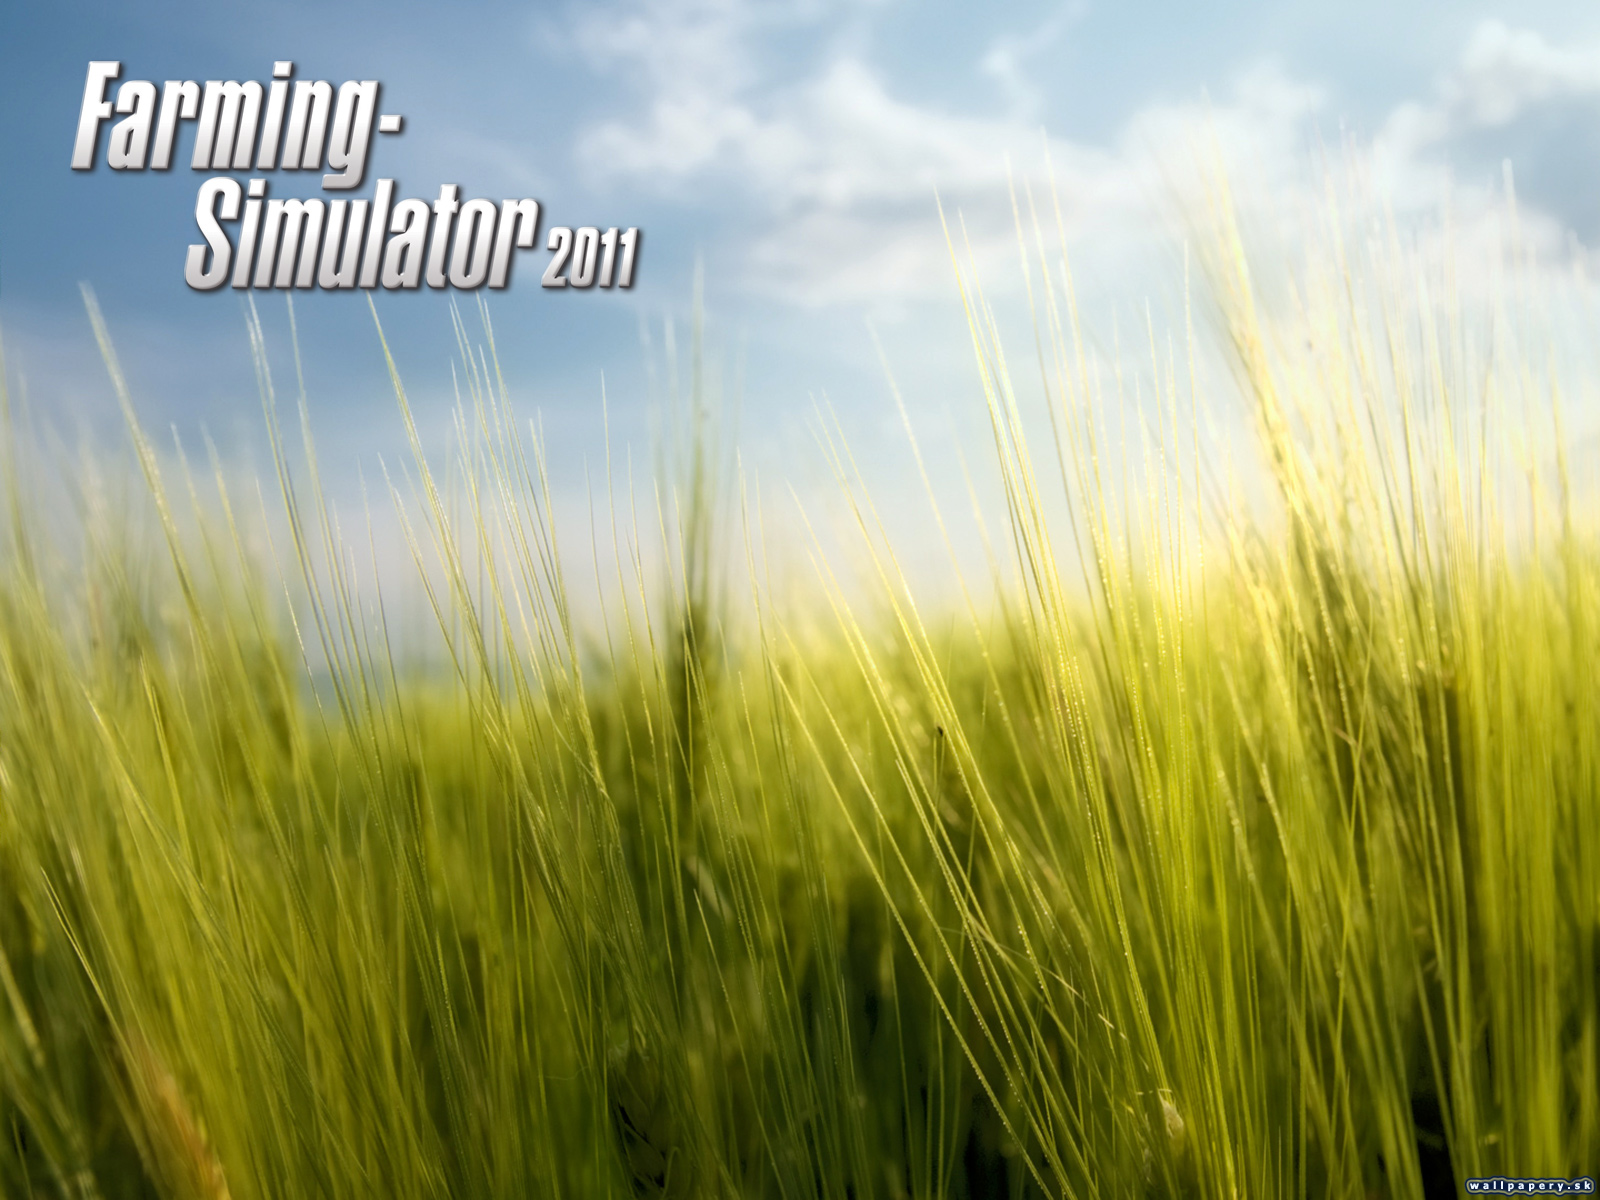 Farming Simulator 2011 - wallpaper 14